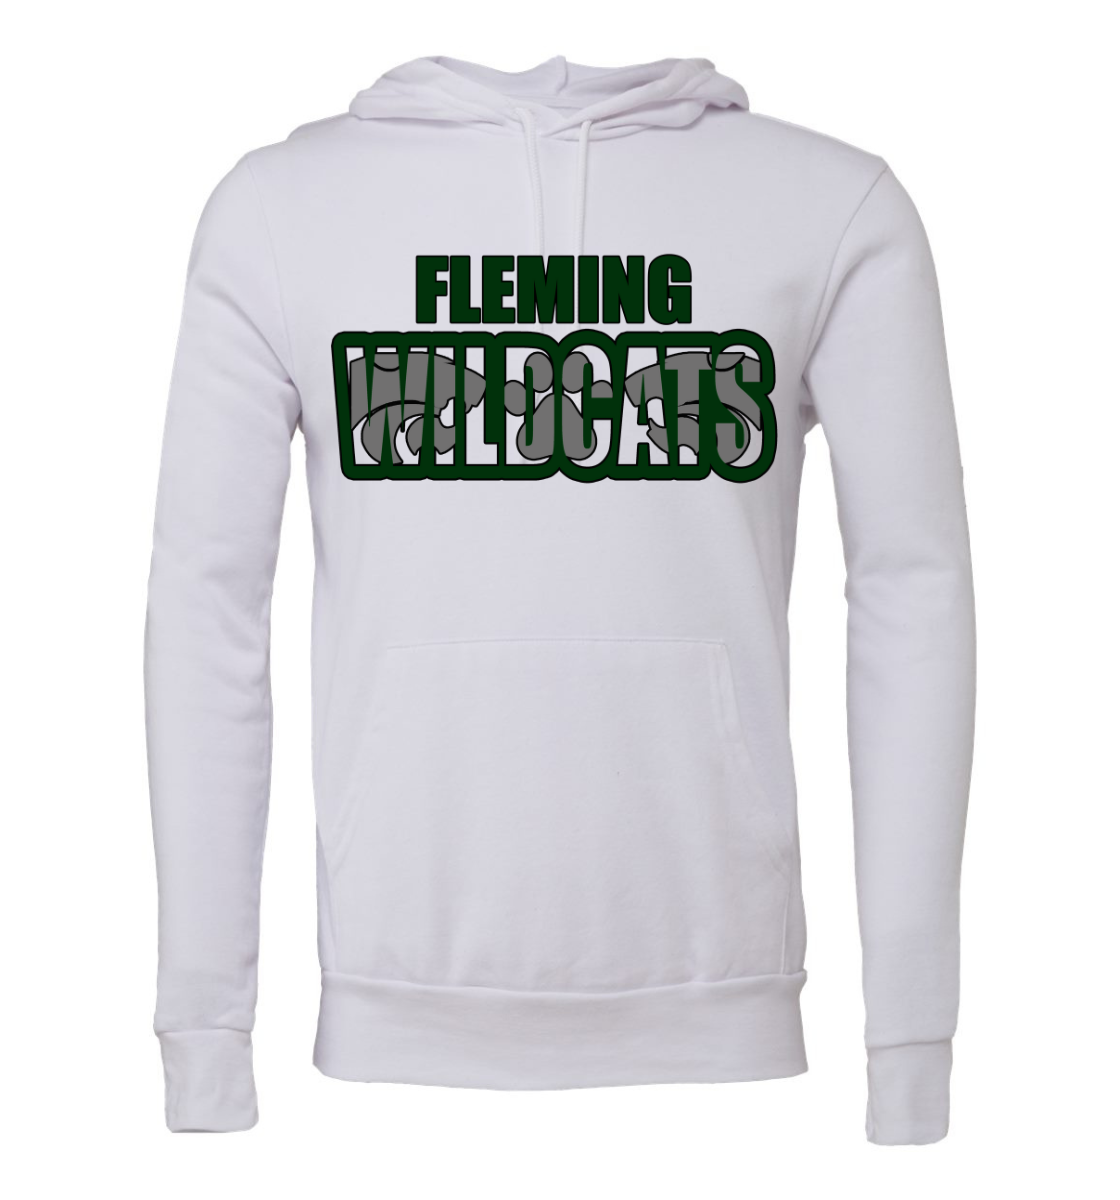 fleming wildcats hoodie - unisex - elevate your spirit!